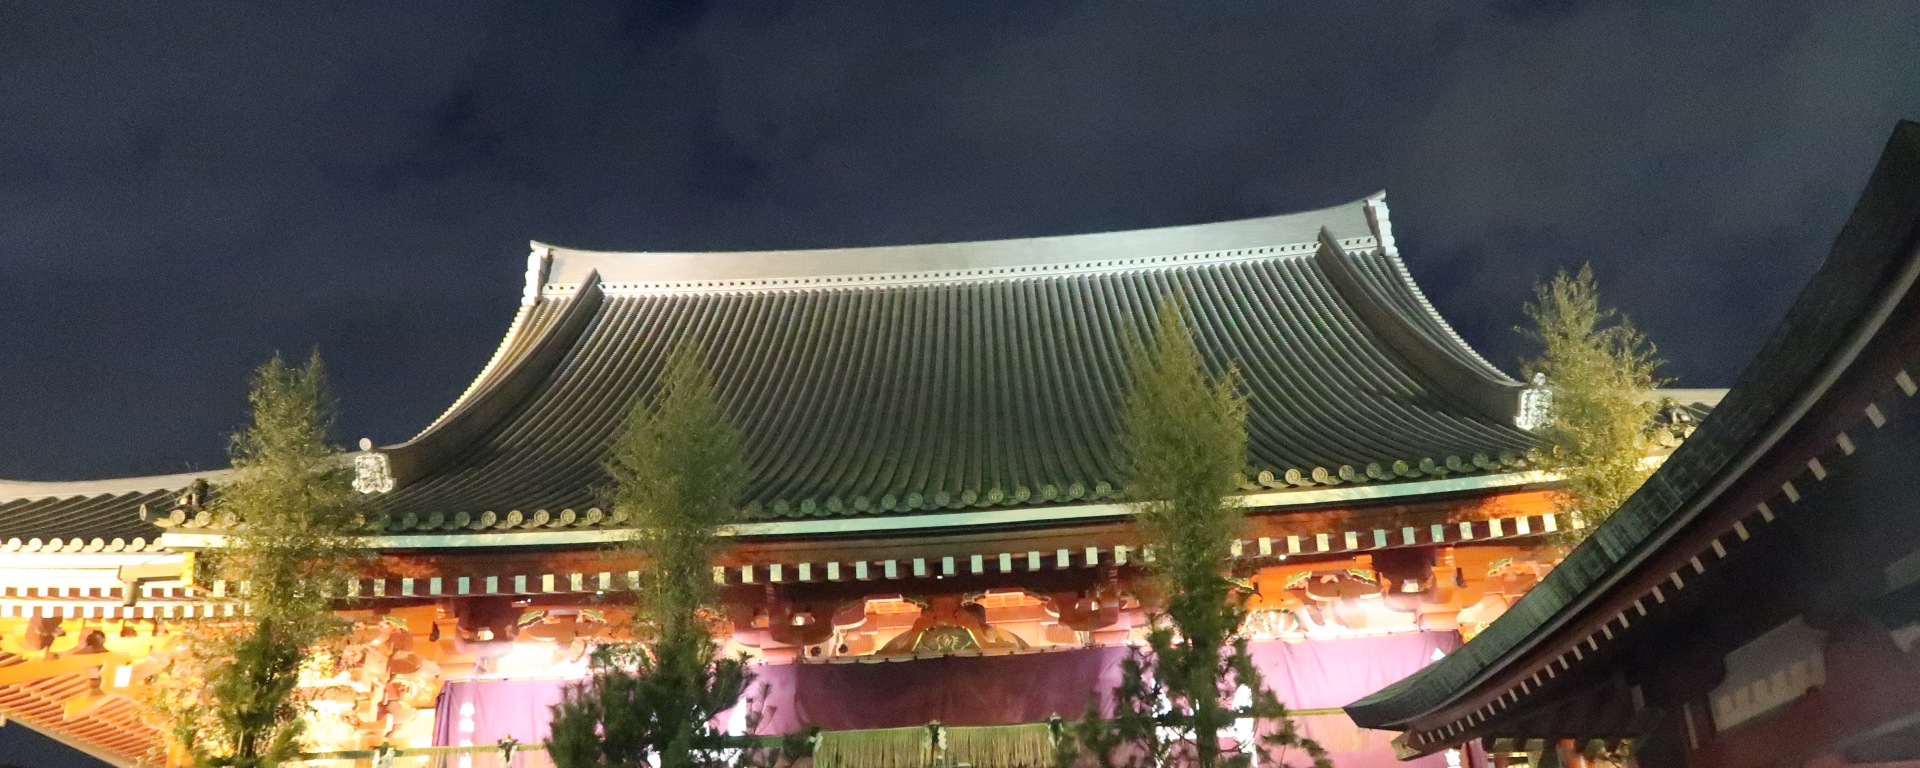 Main building of Sensoji